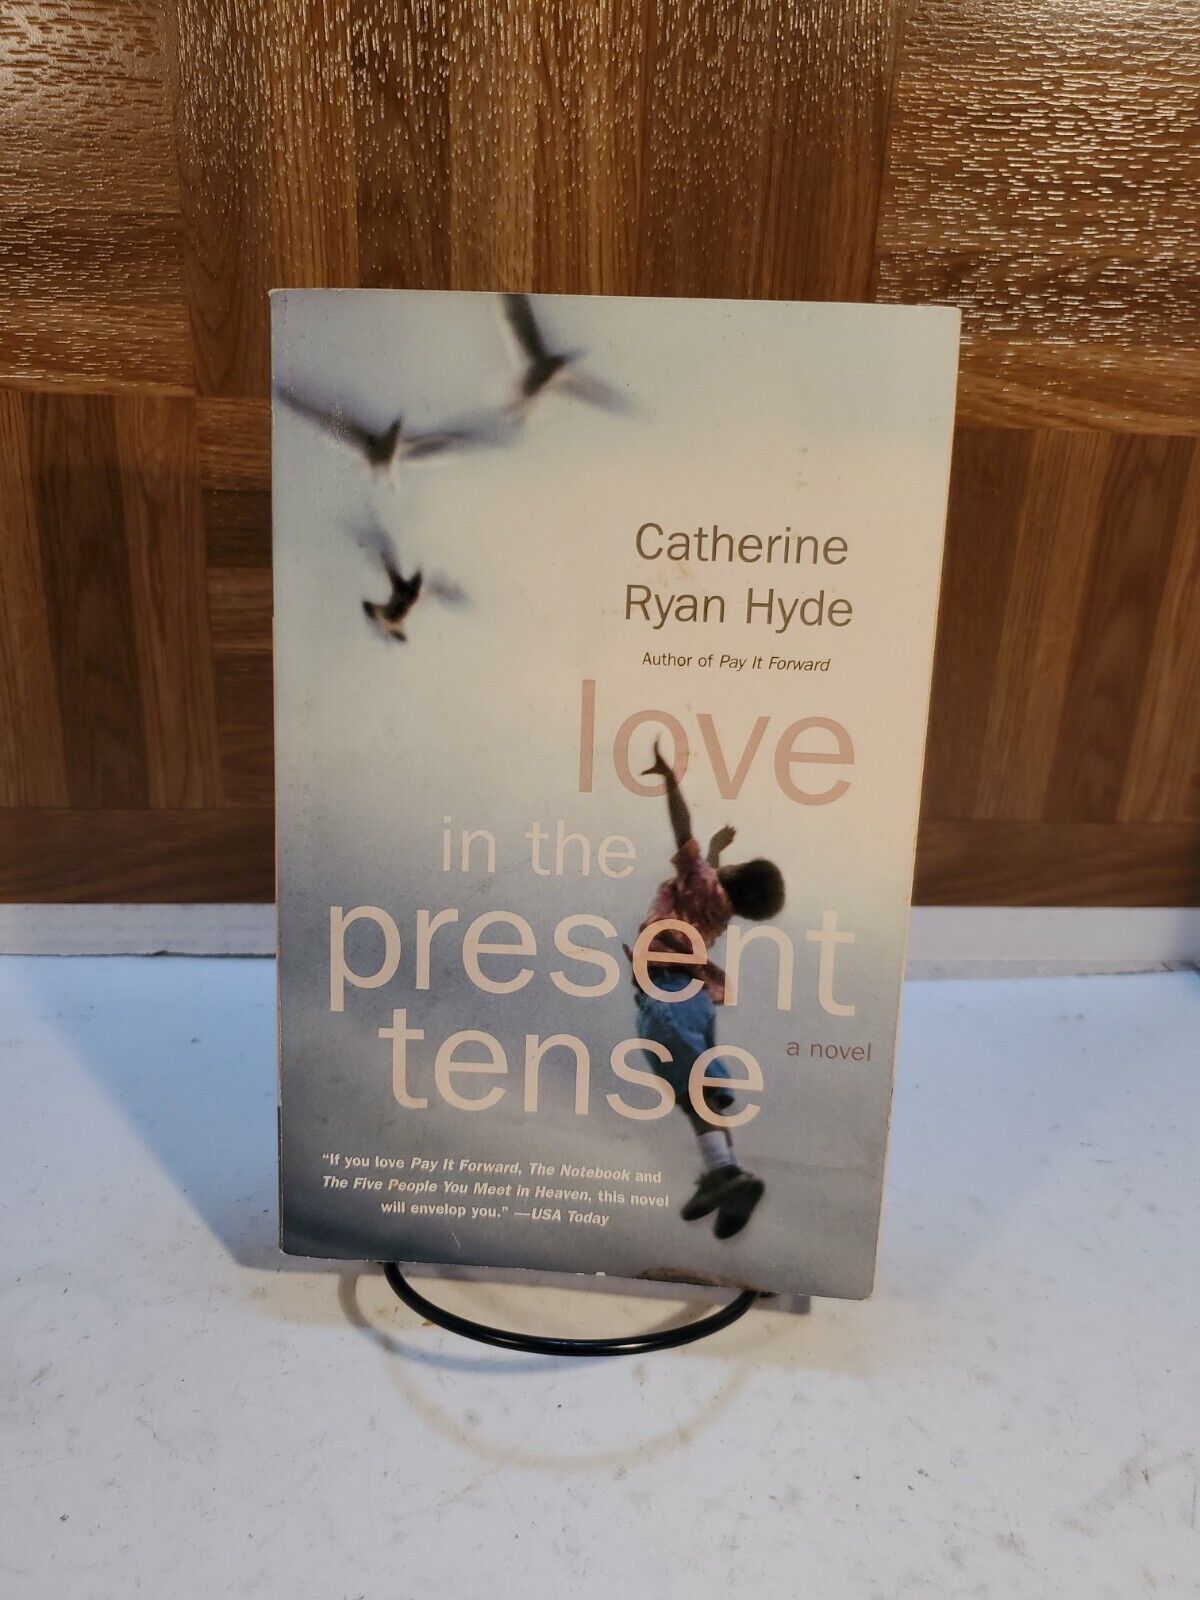 Love in the Present Tense: A Novel